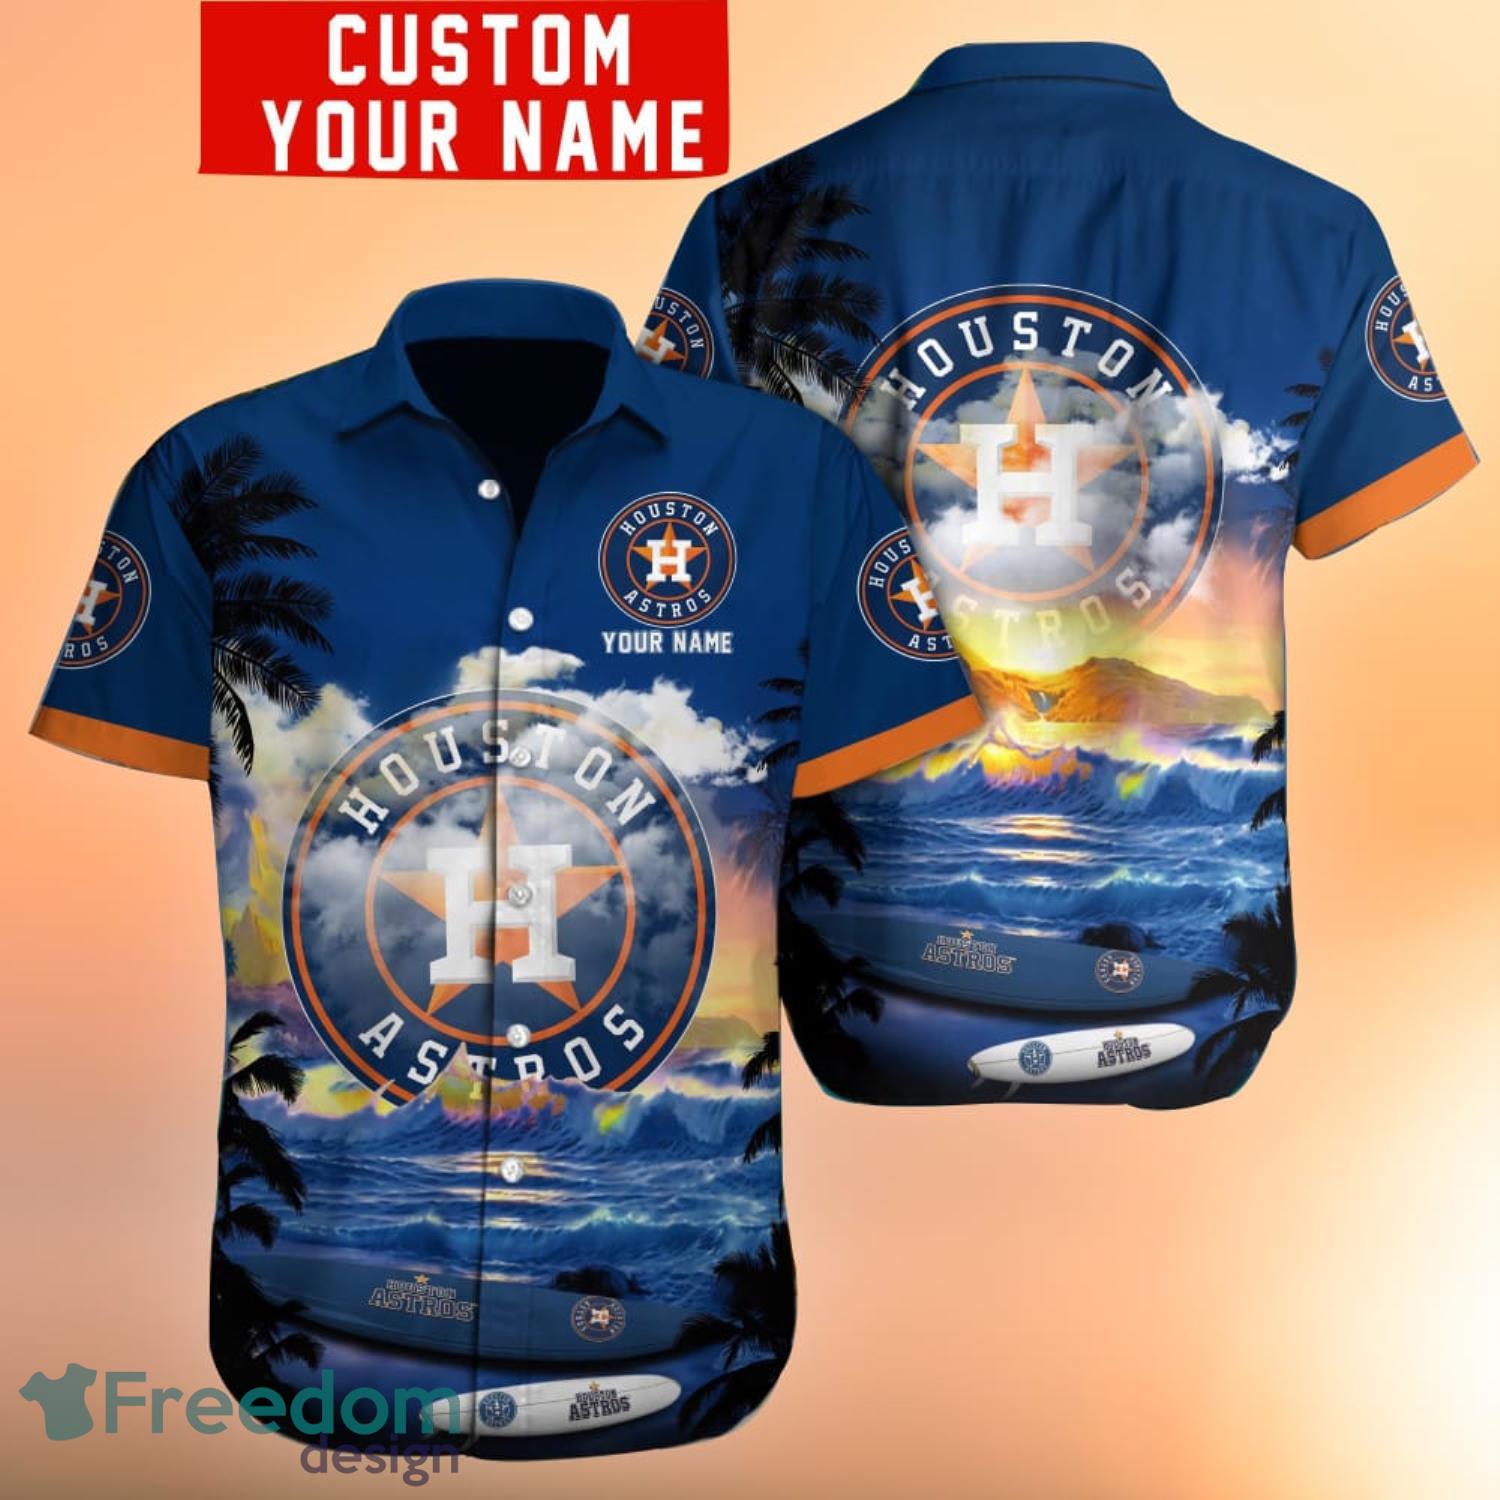 Houston Astros MLB-Personalized For Fans Hawaiian Shirt